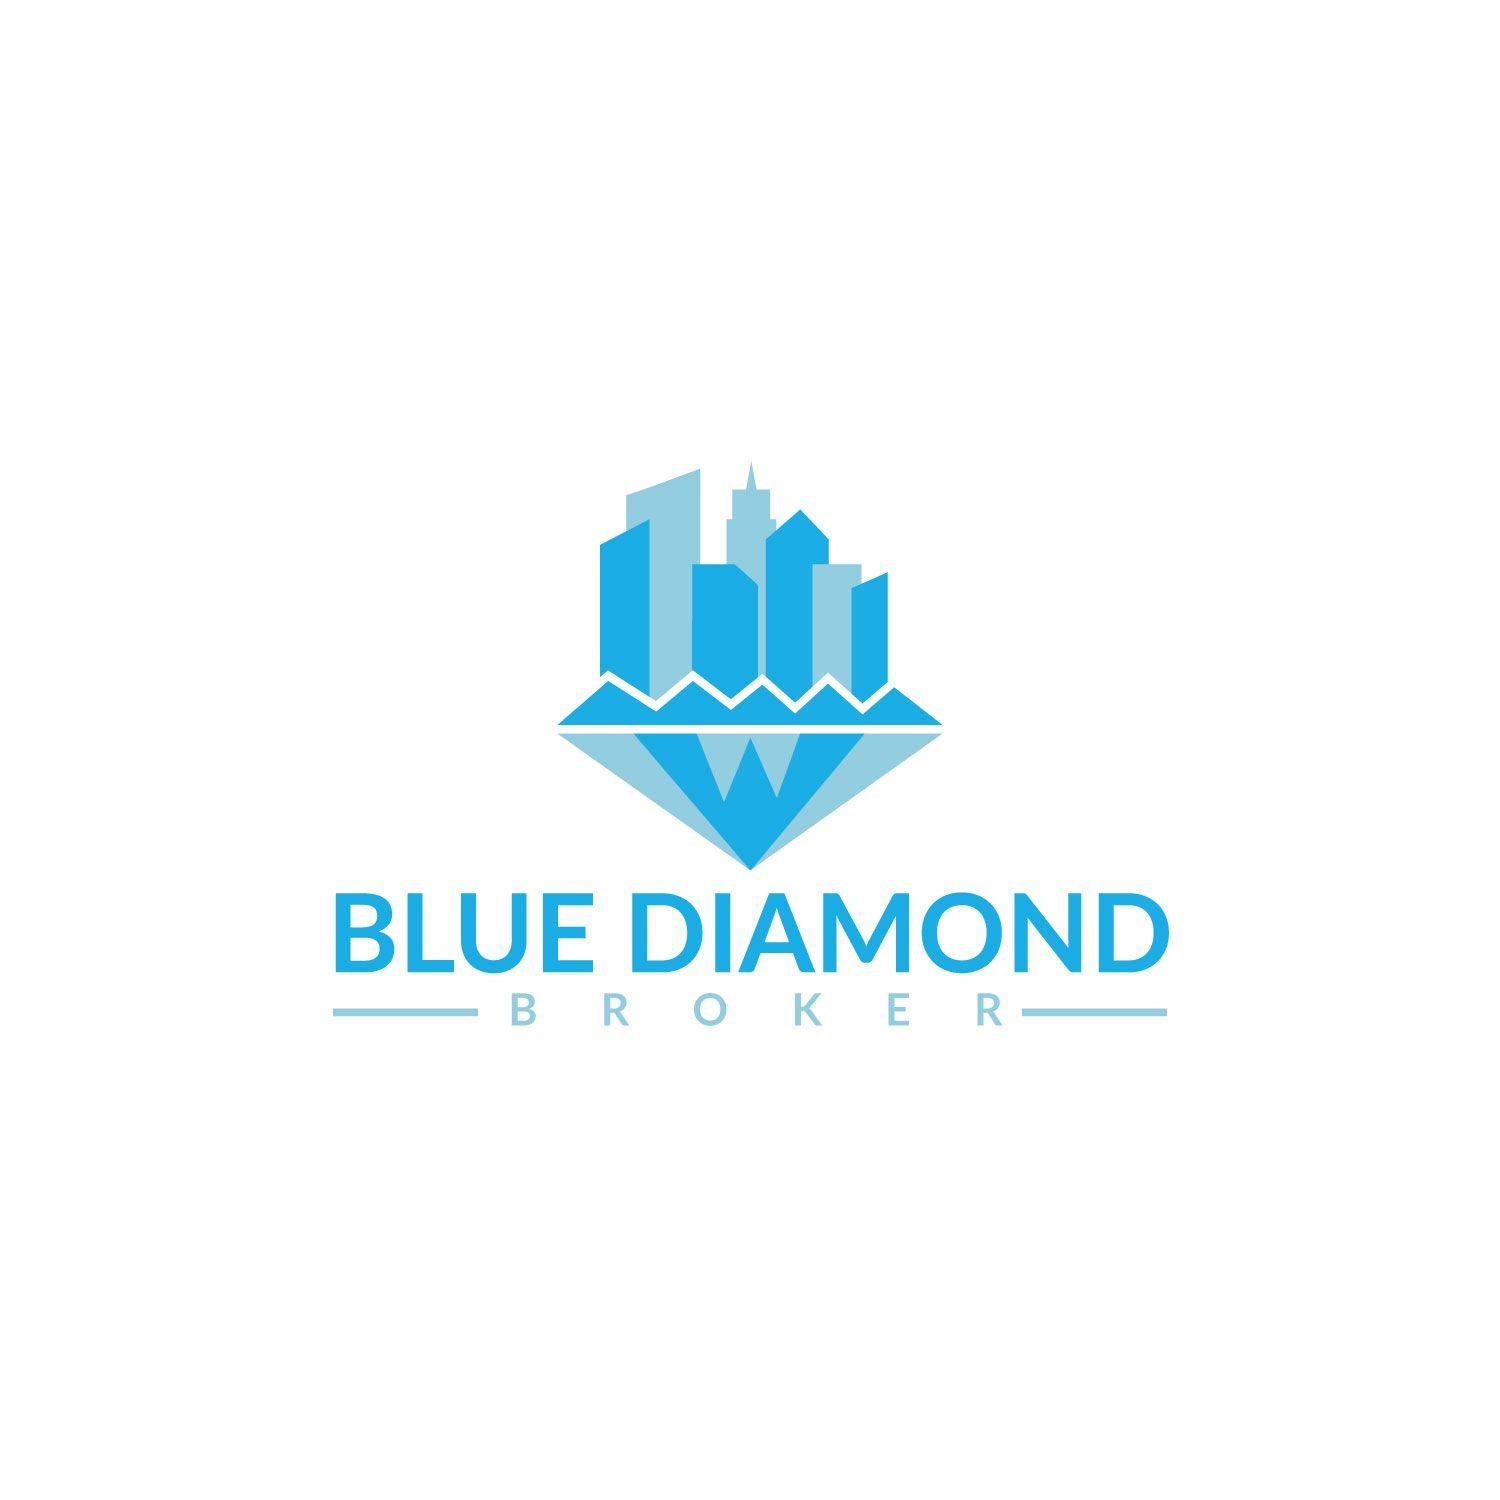 Blue Diamond Brand Logo - Serious, Modern, Real Estate Logo Design for Blue Diamond Broker by ...